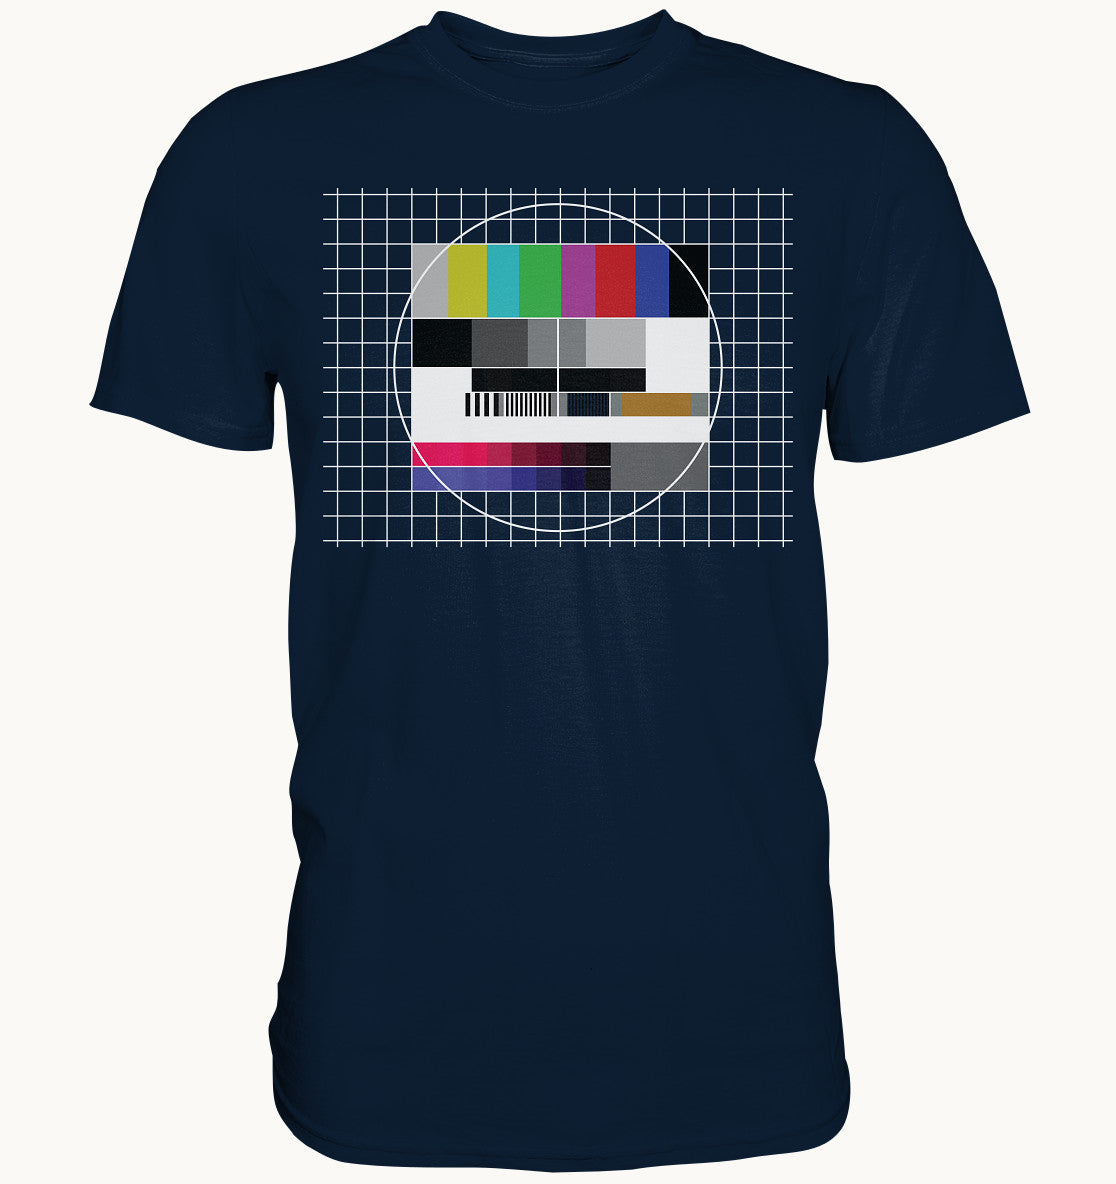 Testbild / Störbild 80ziger/90ziger - Premium Shirt